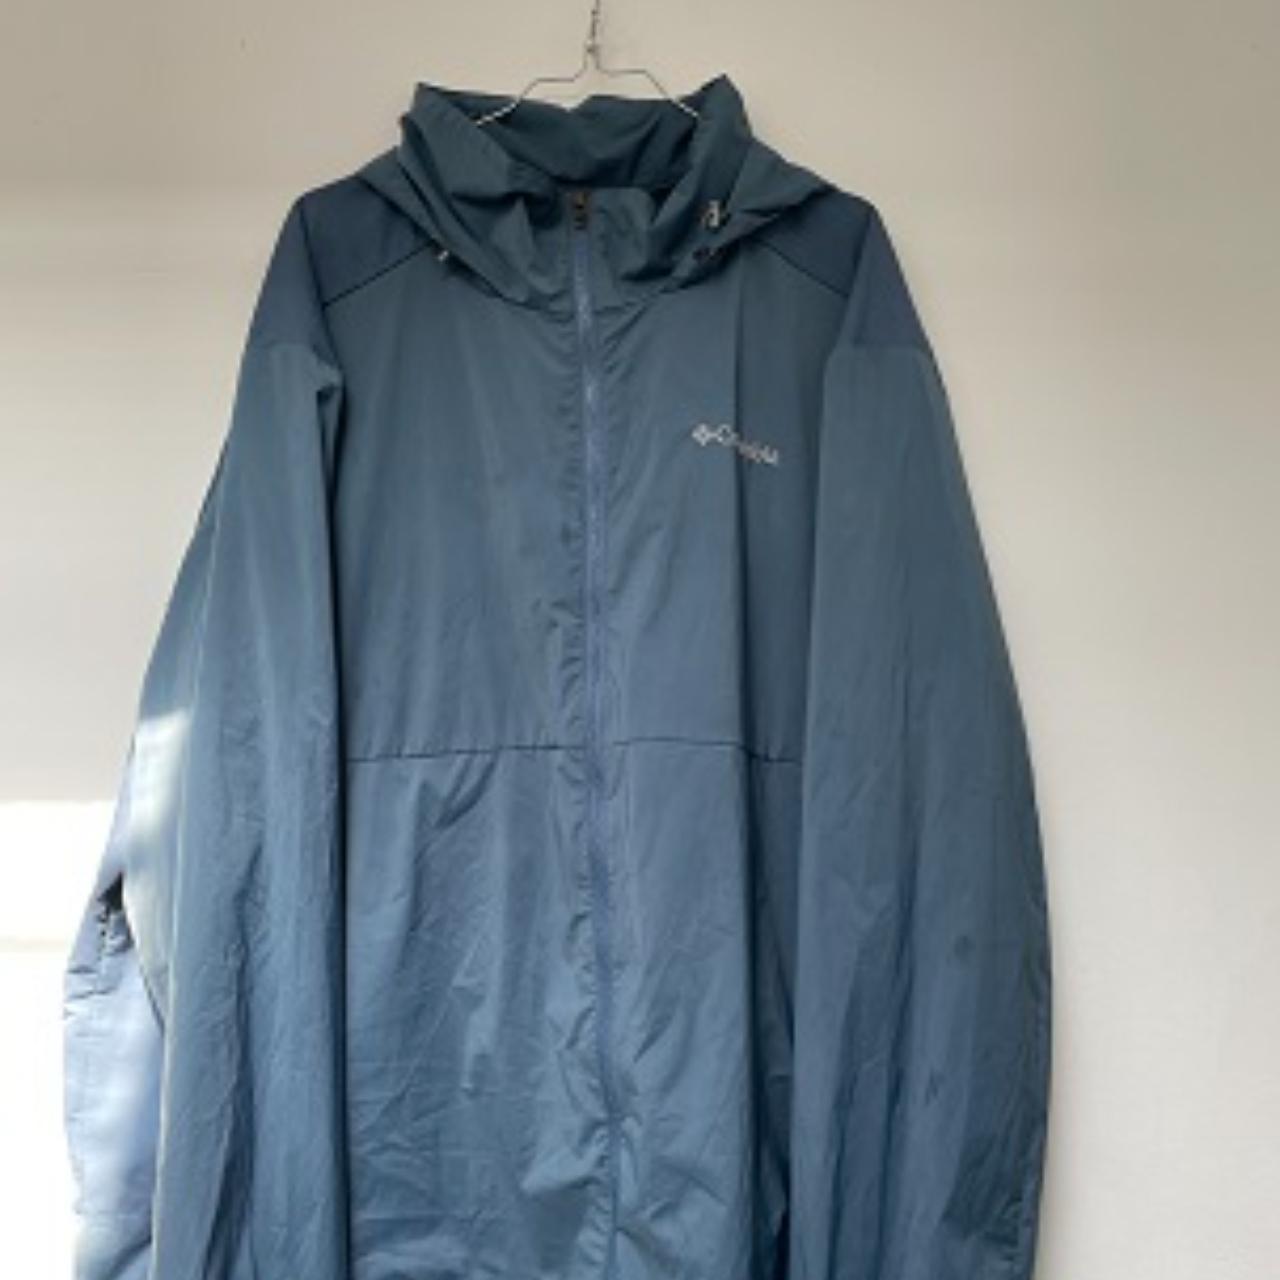 Vintage Columbia Blue Rain zip up jacket